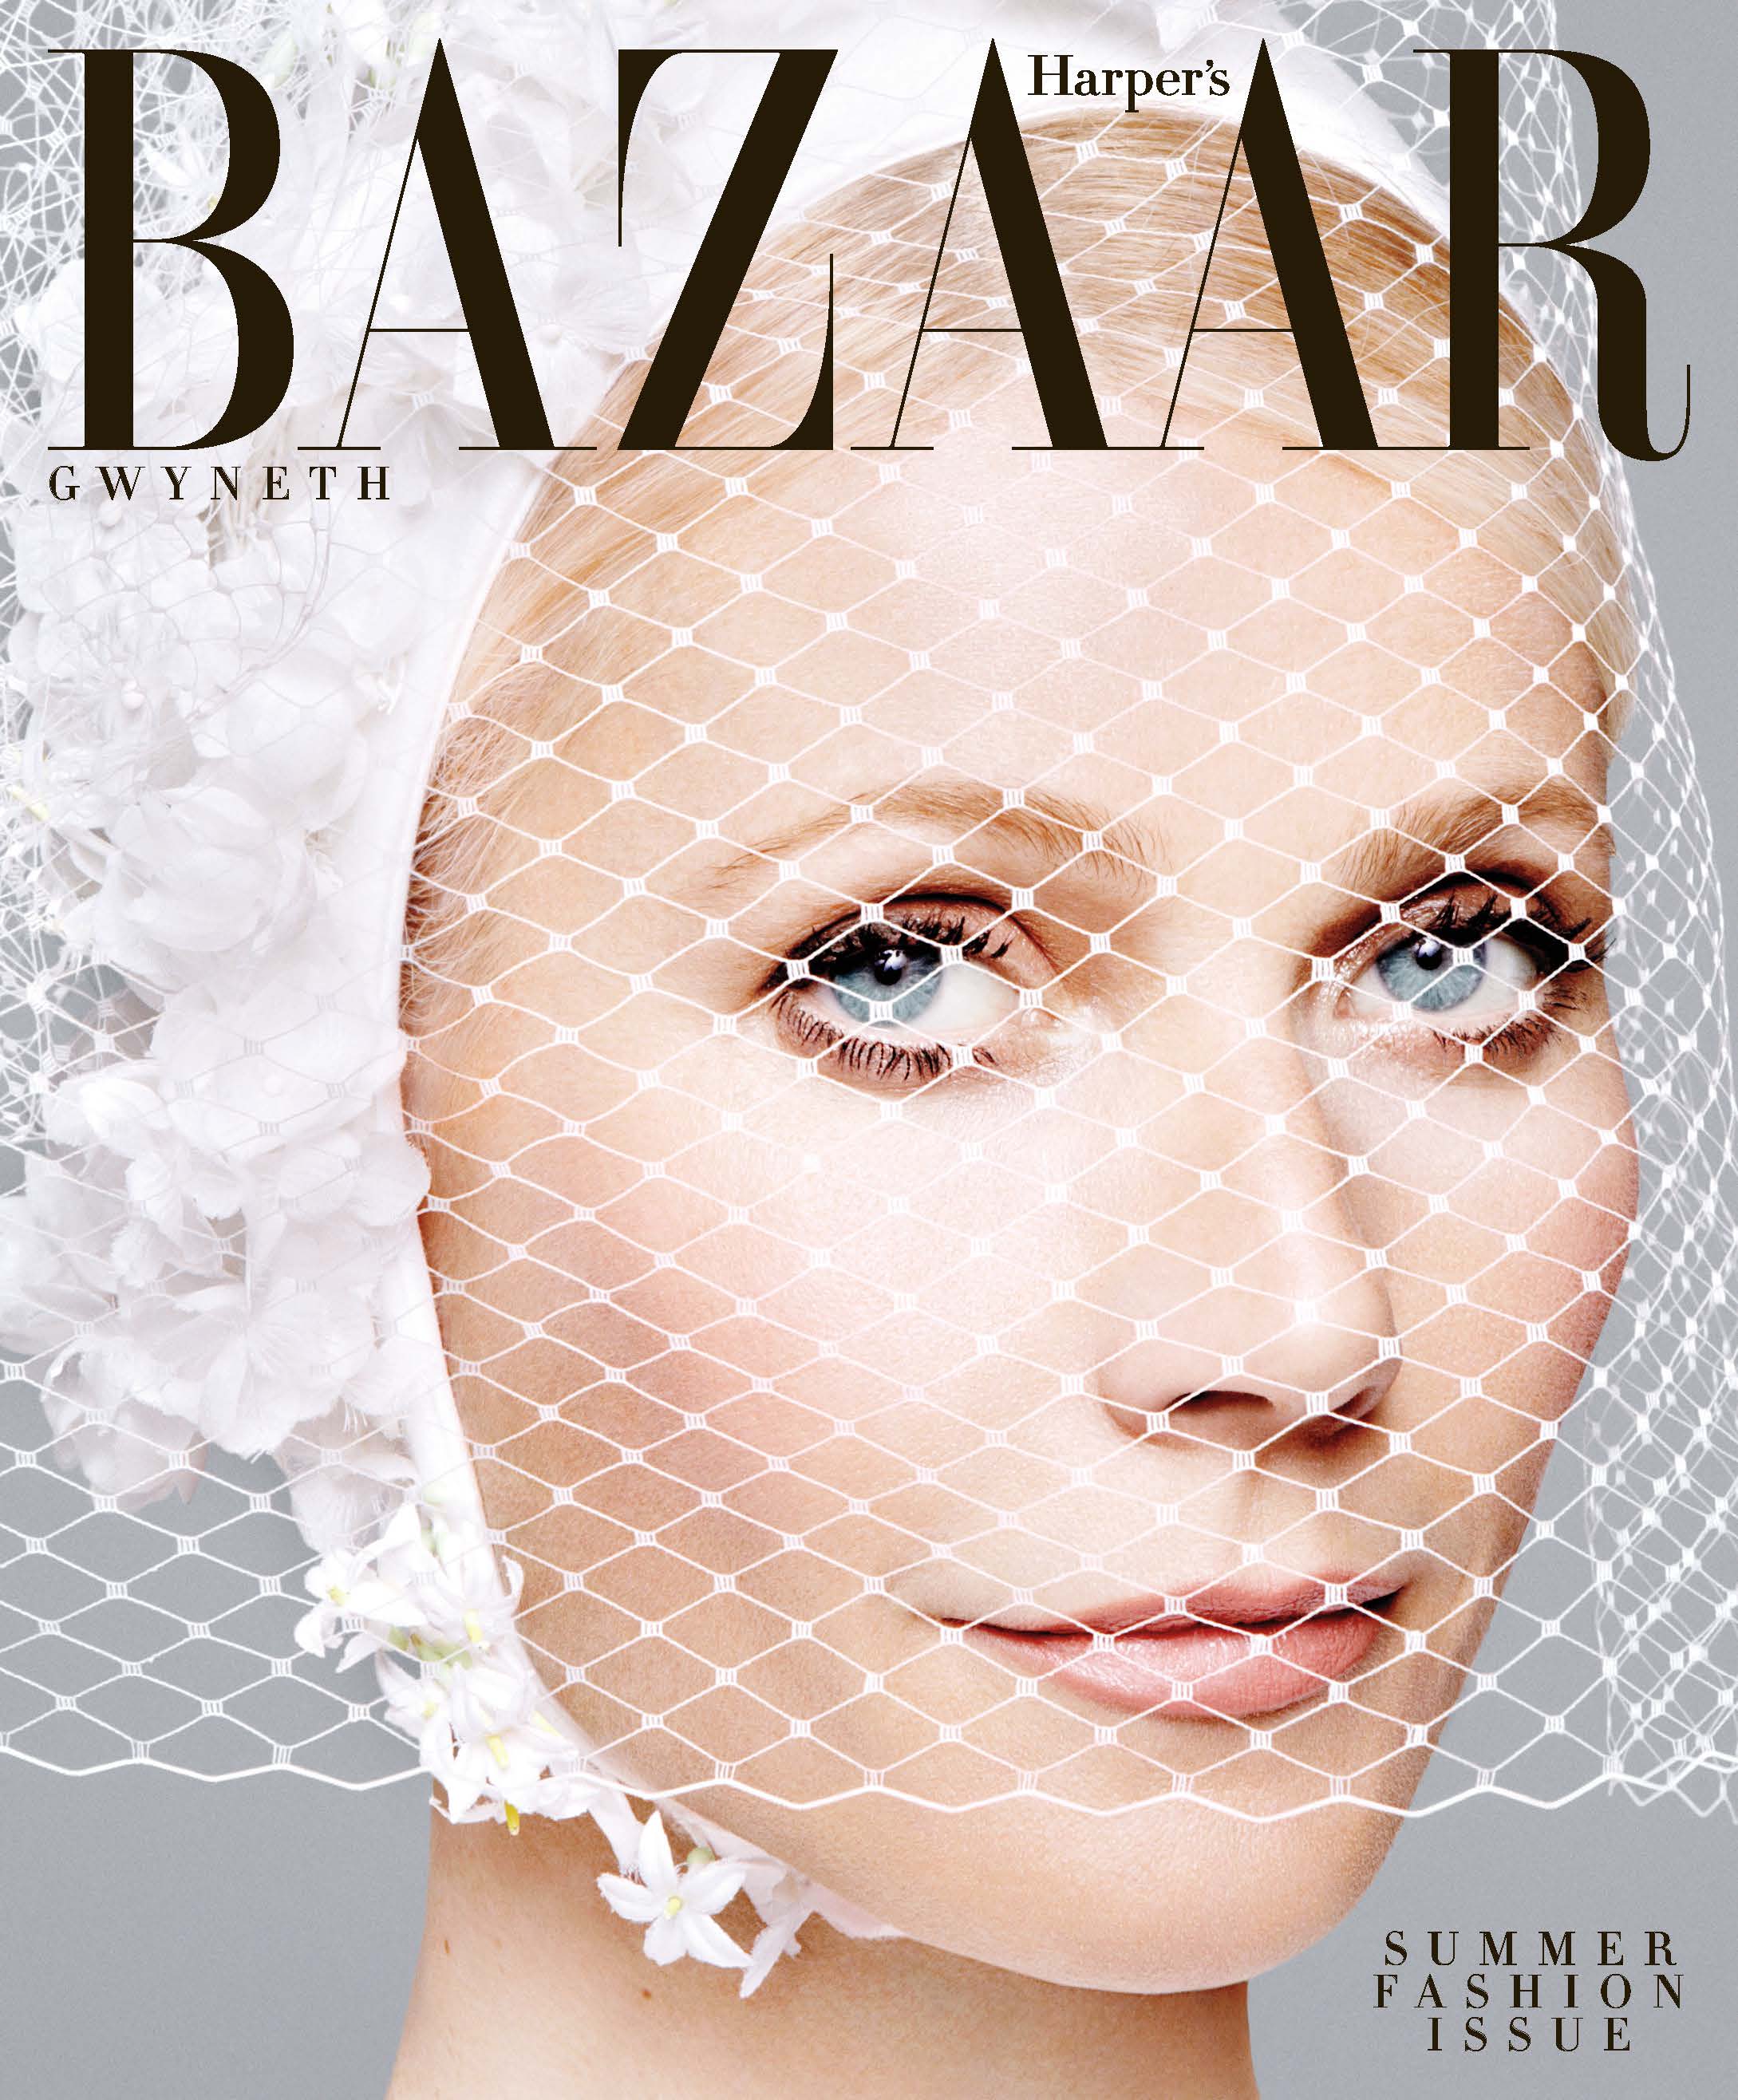 Harper's Bazaar-May, "Summer Fashion Issue"